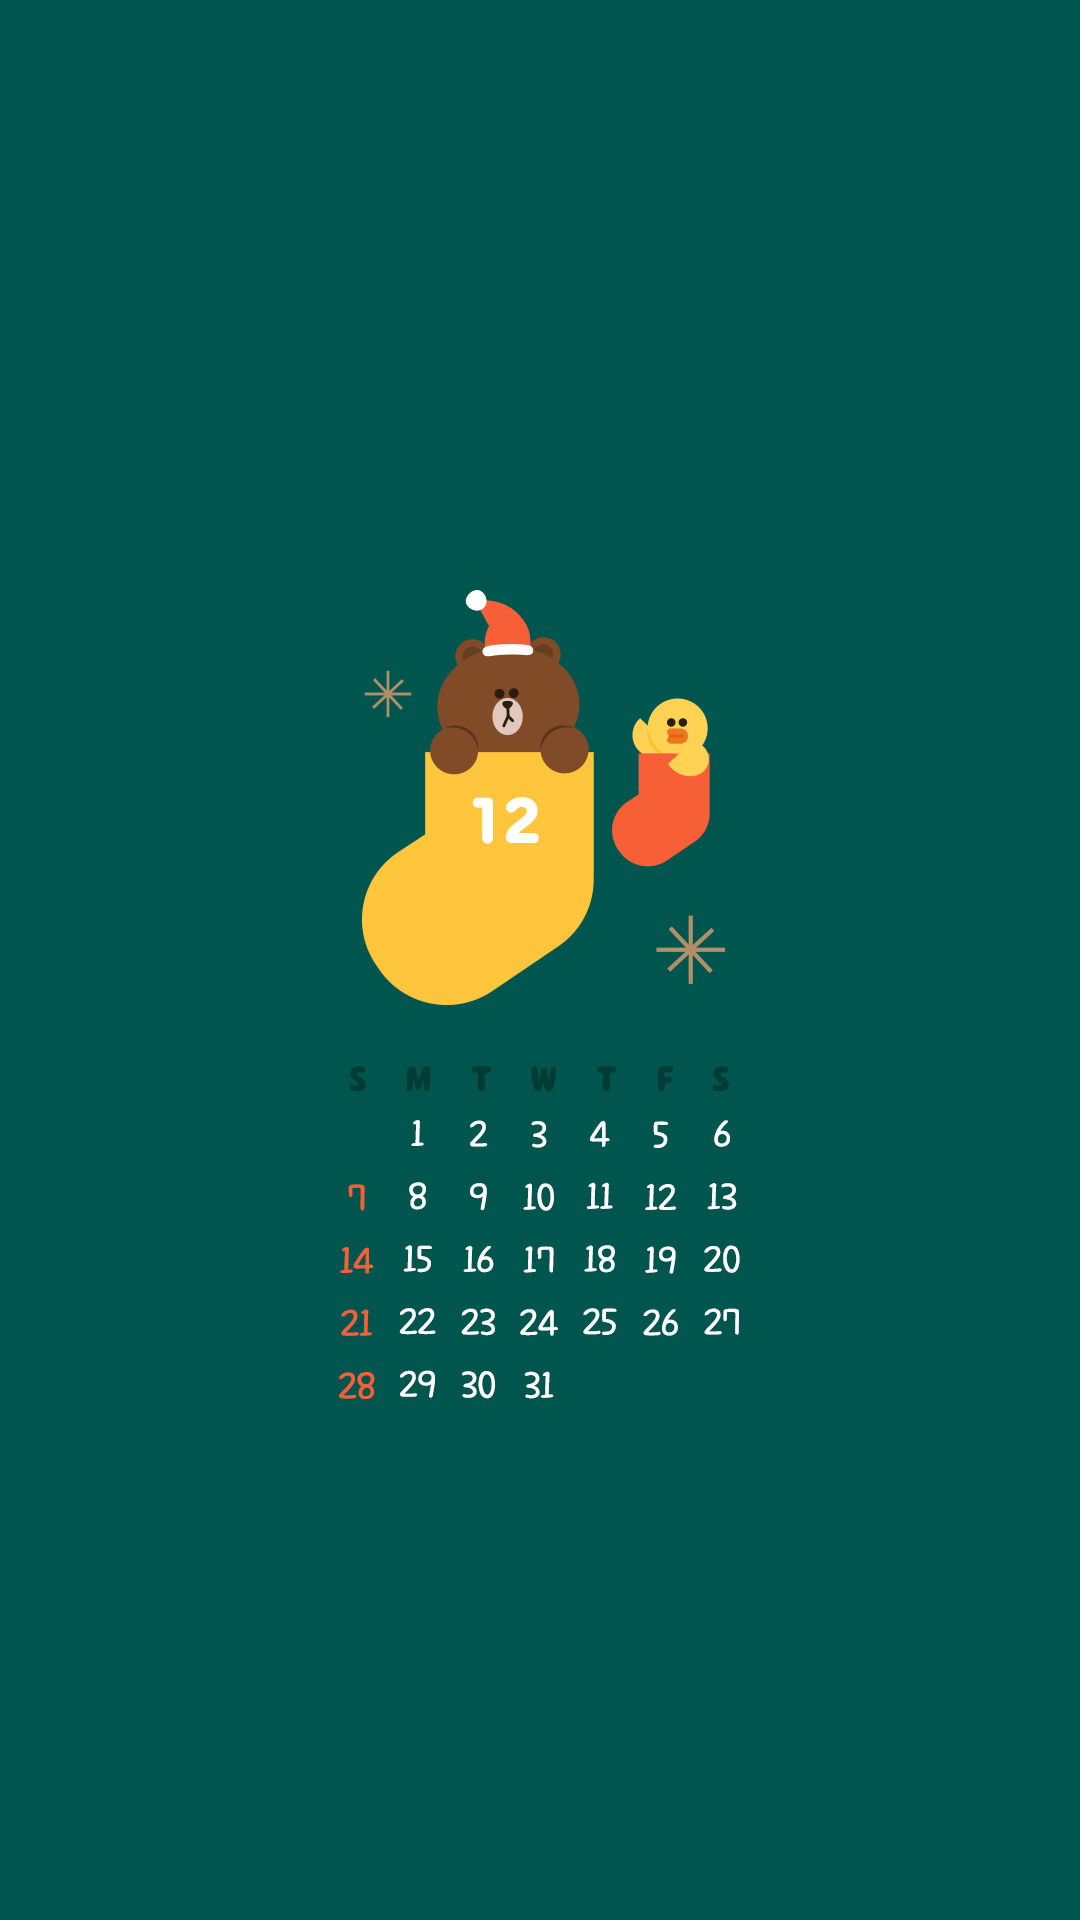 Line Deco公式アカウント A Twitter Lineキャラクターの12月カレンダー ロック画面にどうぞ いちいち手帳を出さずに すぐに日付けをチェック しかも 可愛いね 12月 カワイイカレンダー Http T Co Rkkimfvgzp Twitter